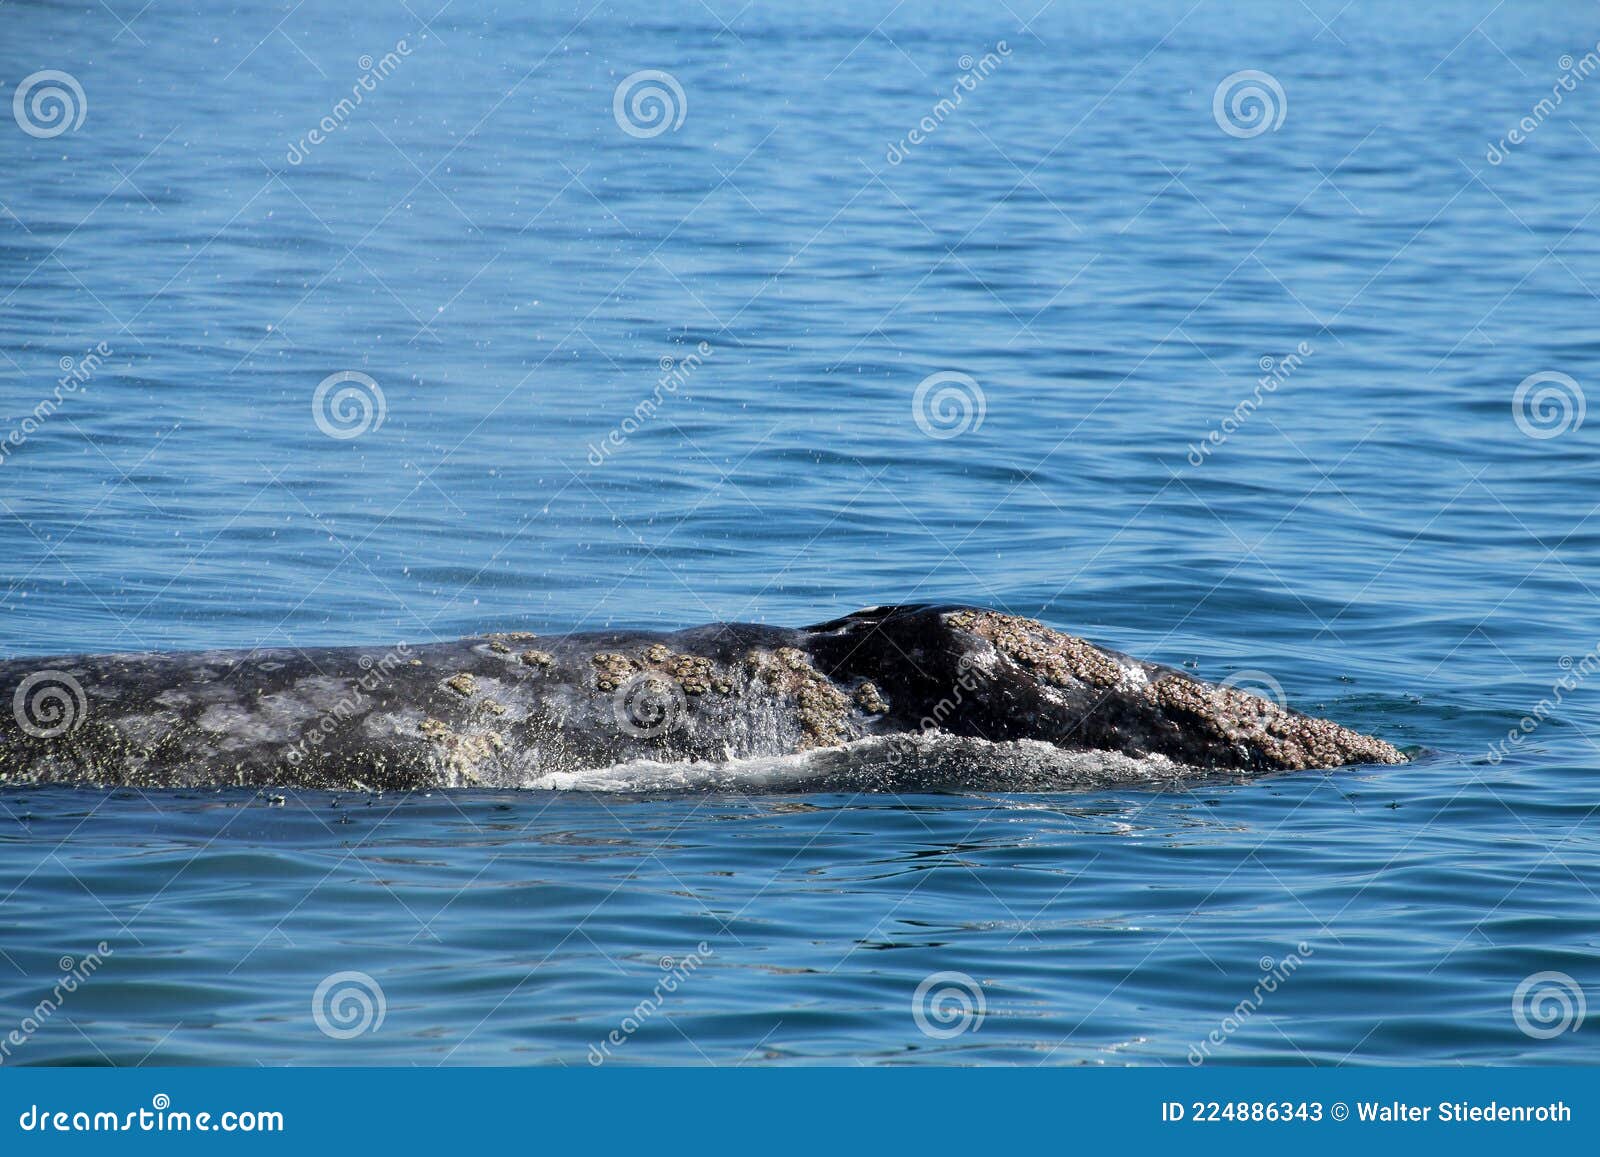 california gray whale close up in baja california sur, mexico